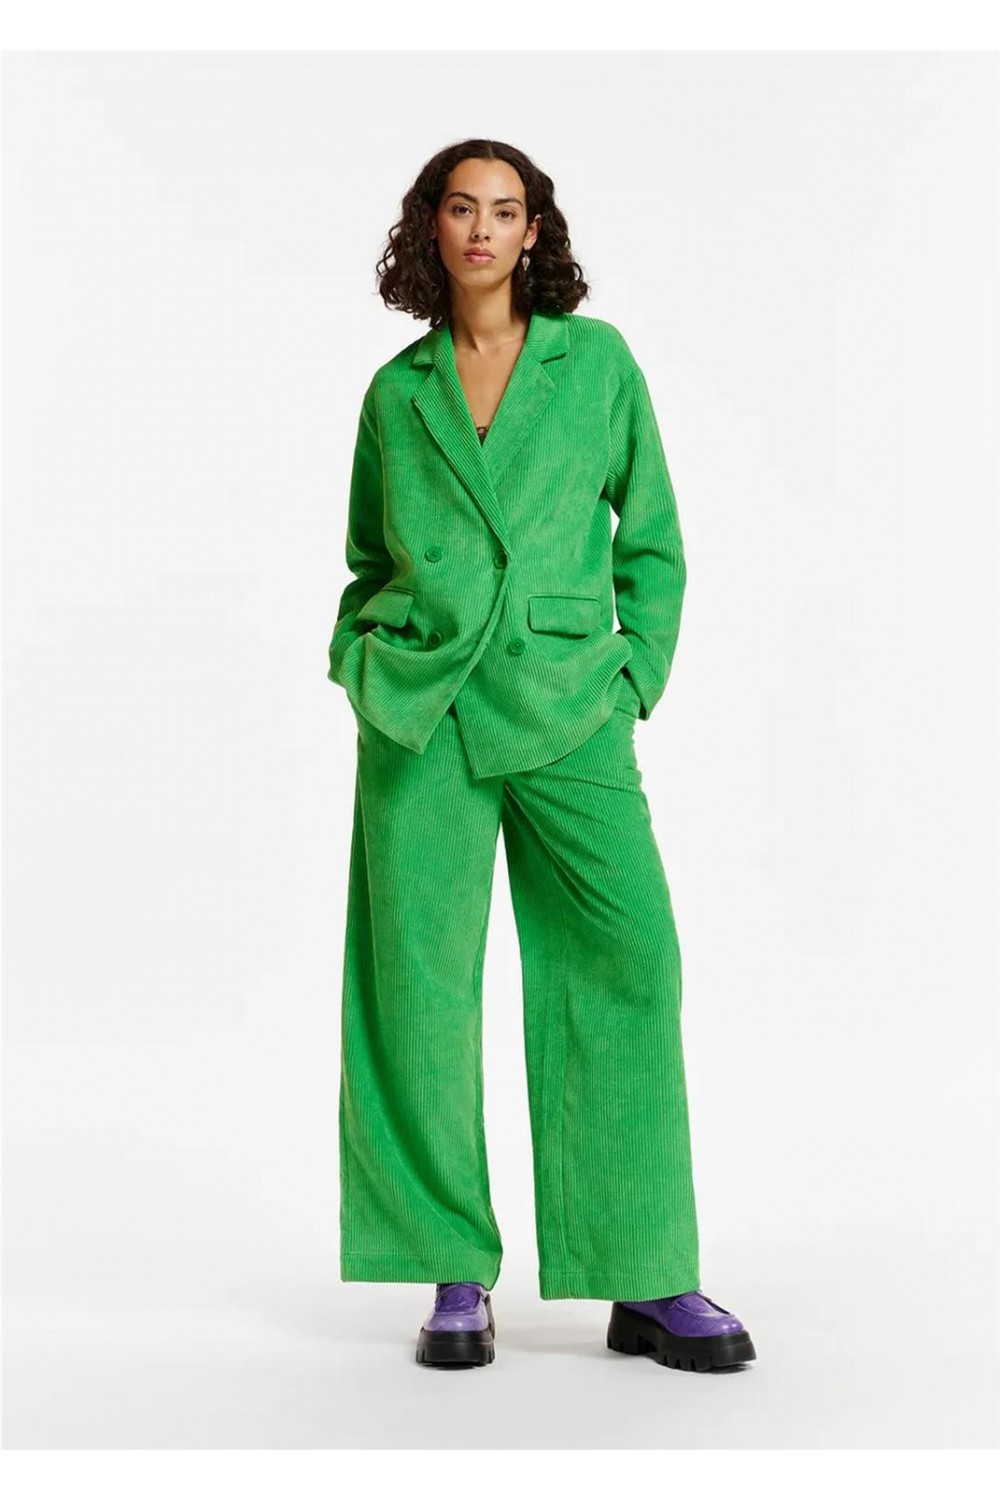 Per Se Mujer Pantalon de Pana pierna ancha color verde olivo medidas  aproximadas